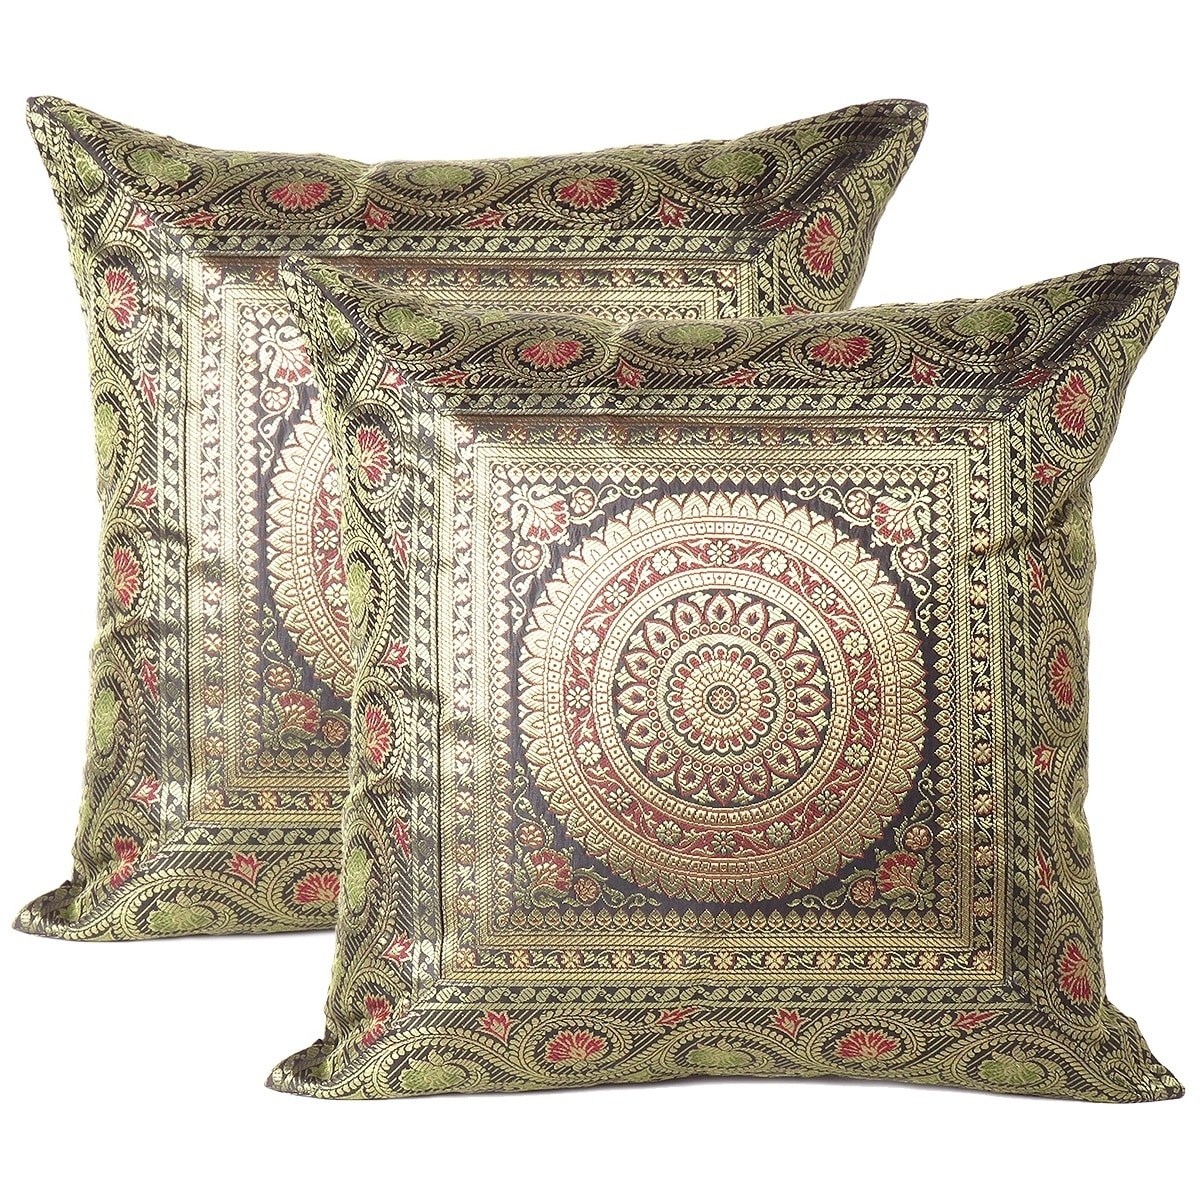 Decorative Kantha Couch Pillow Cover Boho Shibori Throw Cushion Cover Case for